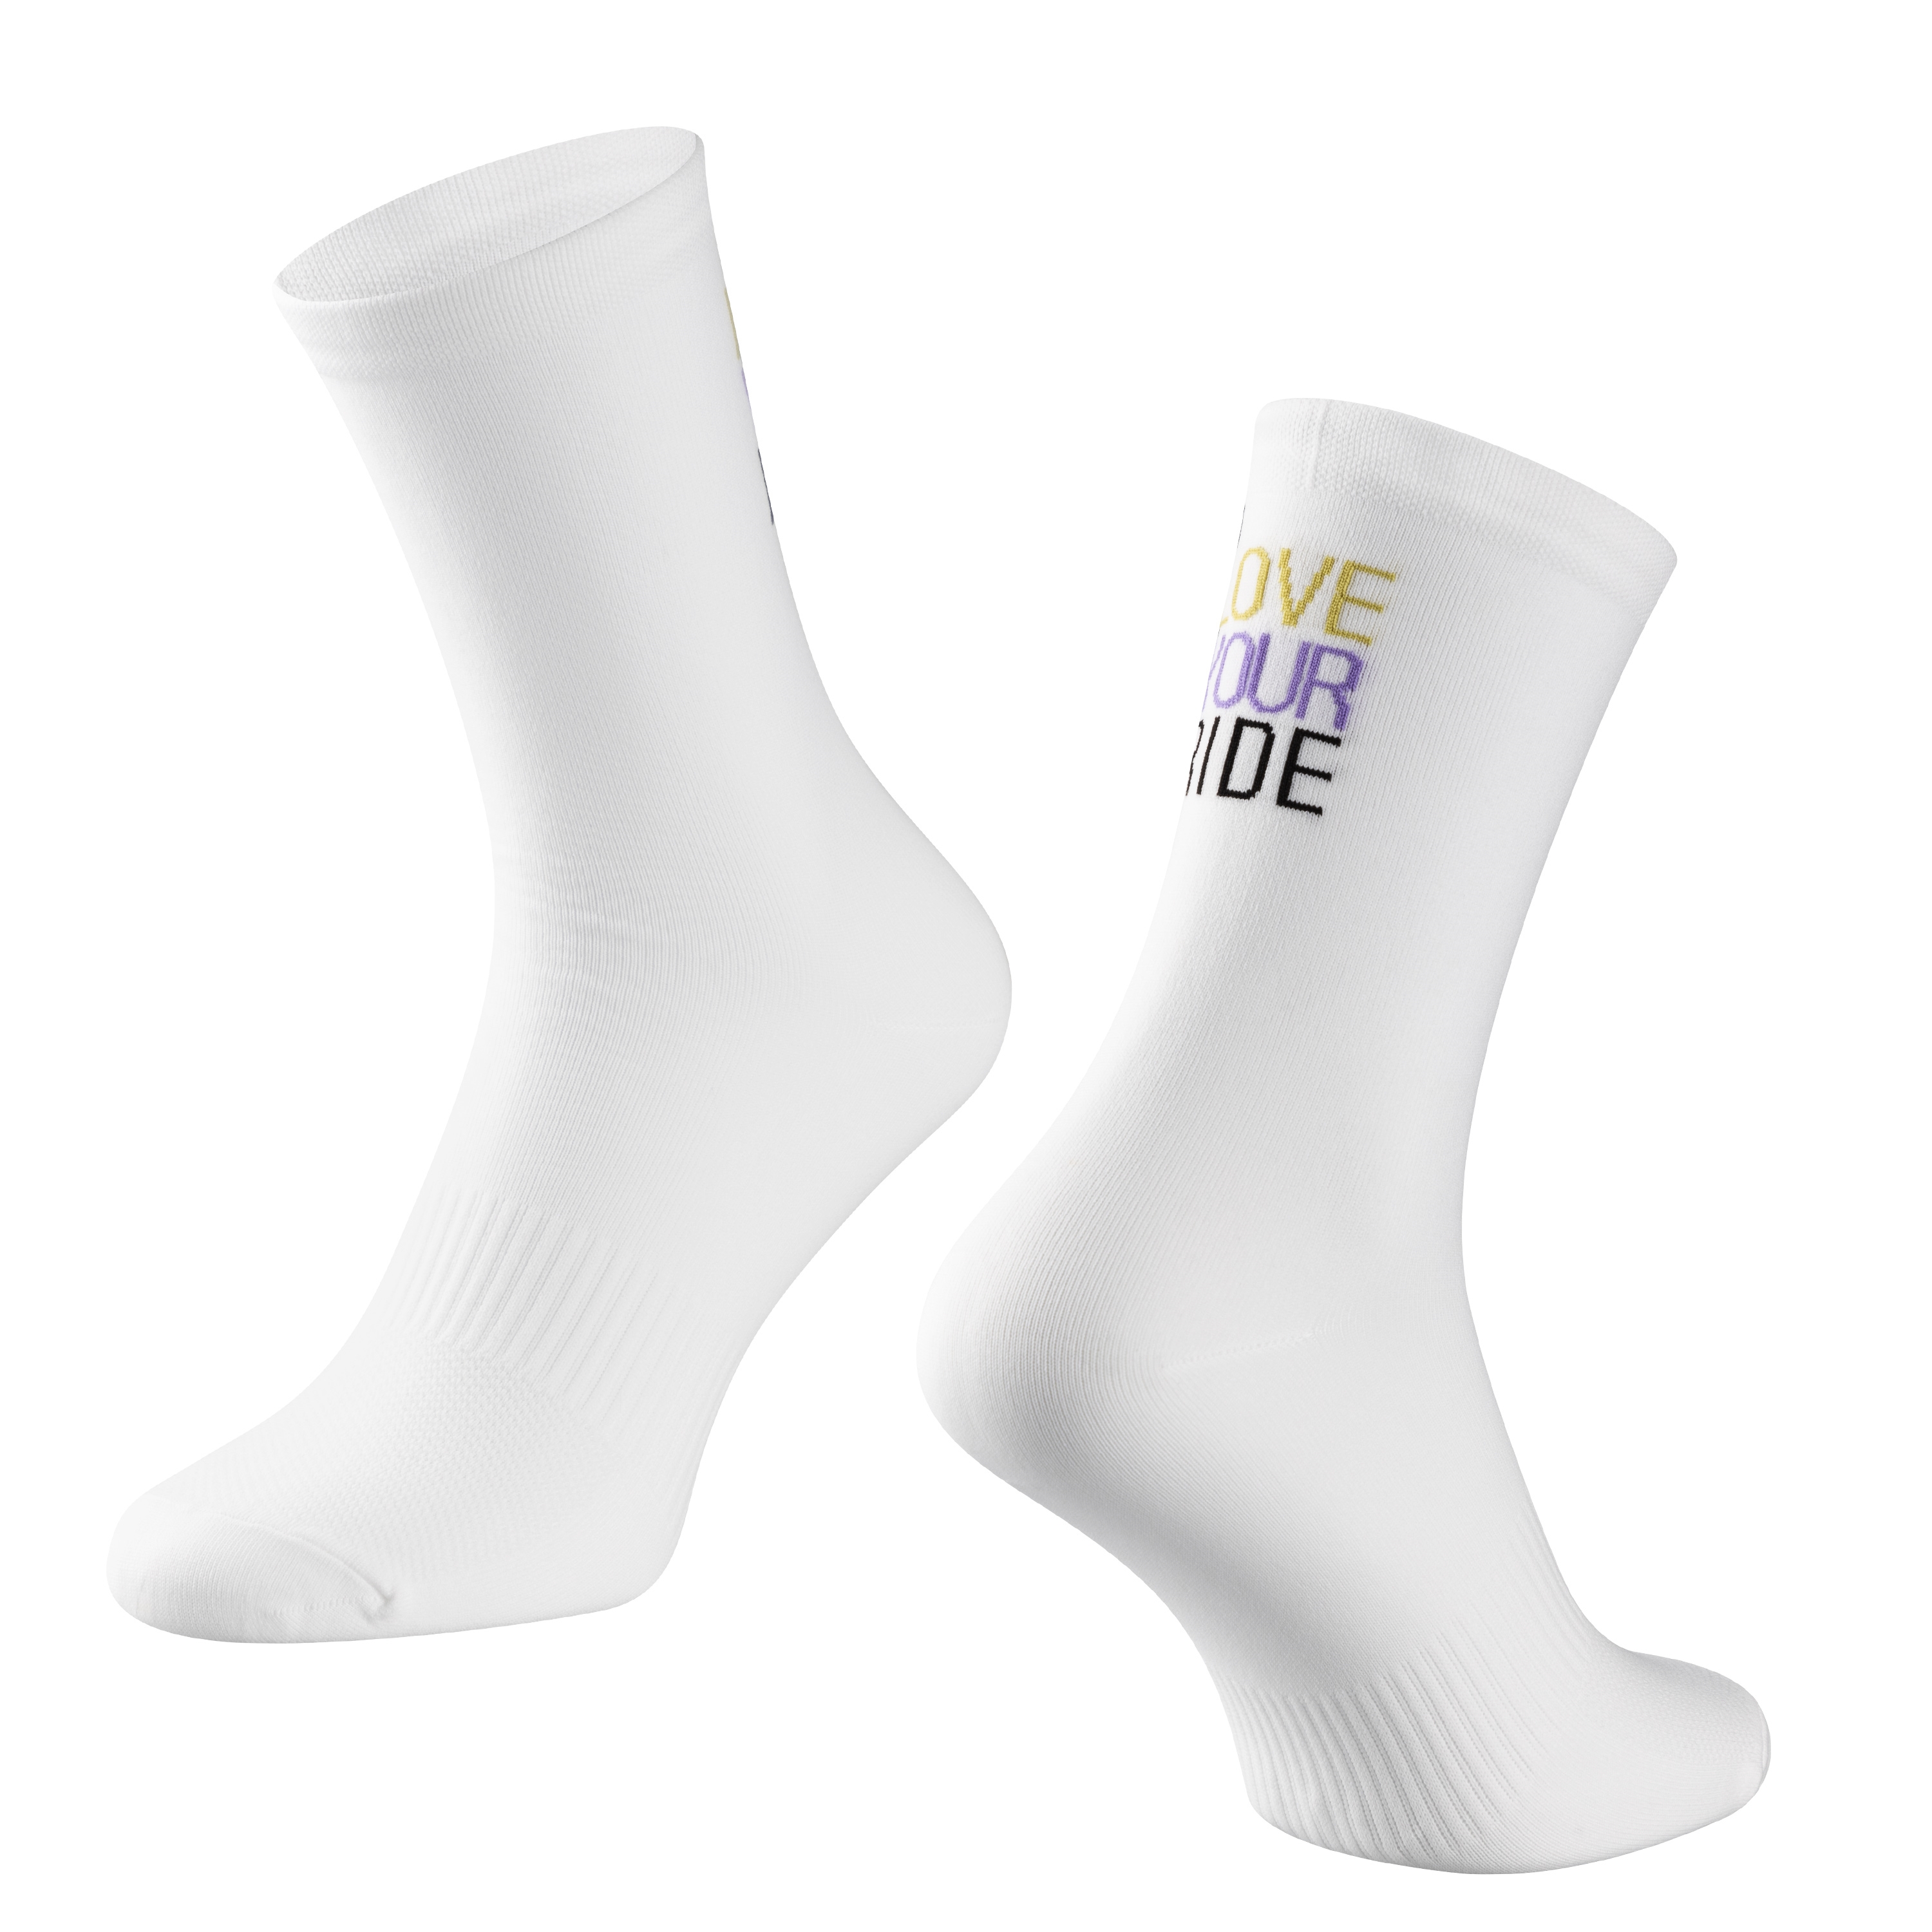 ponožky FORCE LOVE YOUR RIDE, bílé S-M/36-41 Velikost: S-M